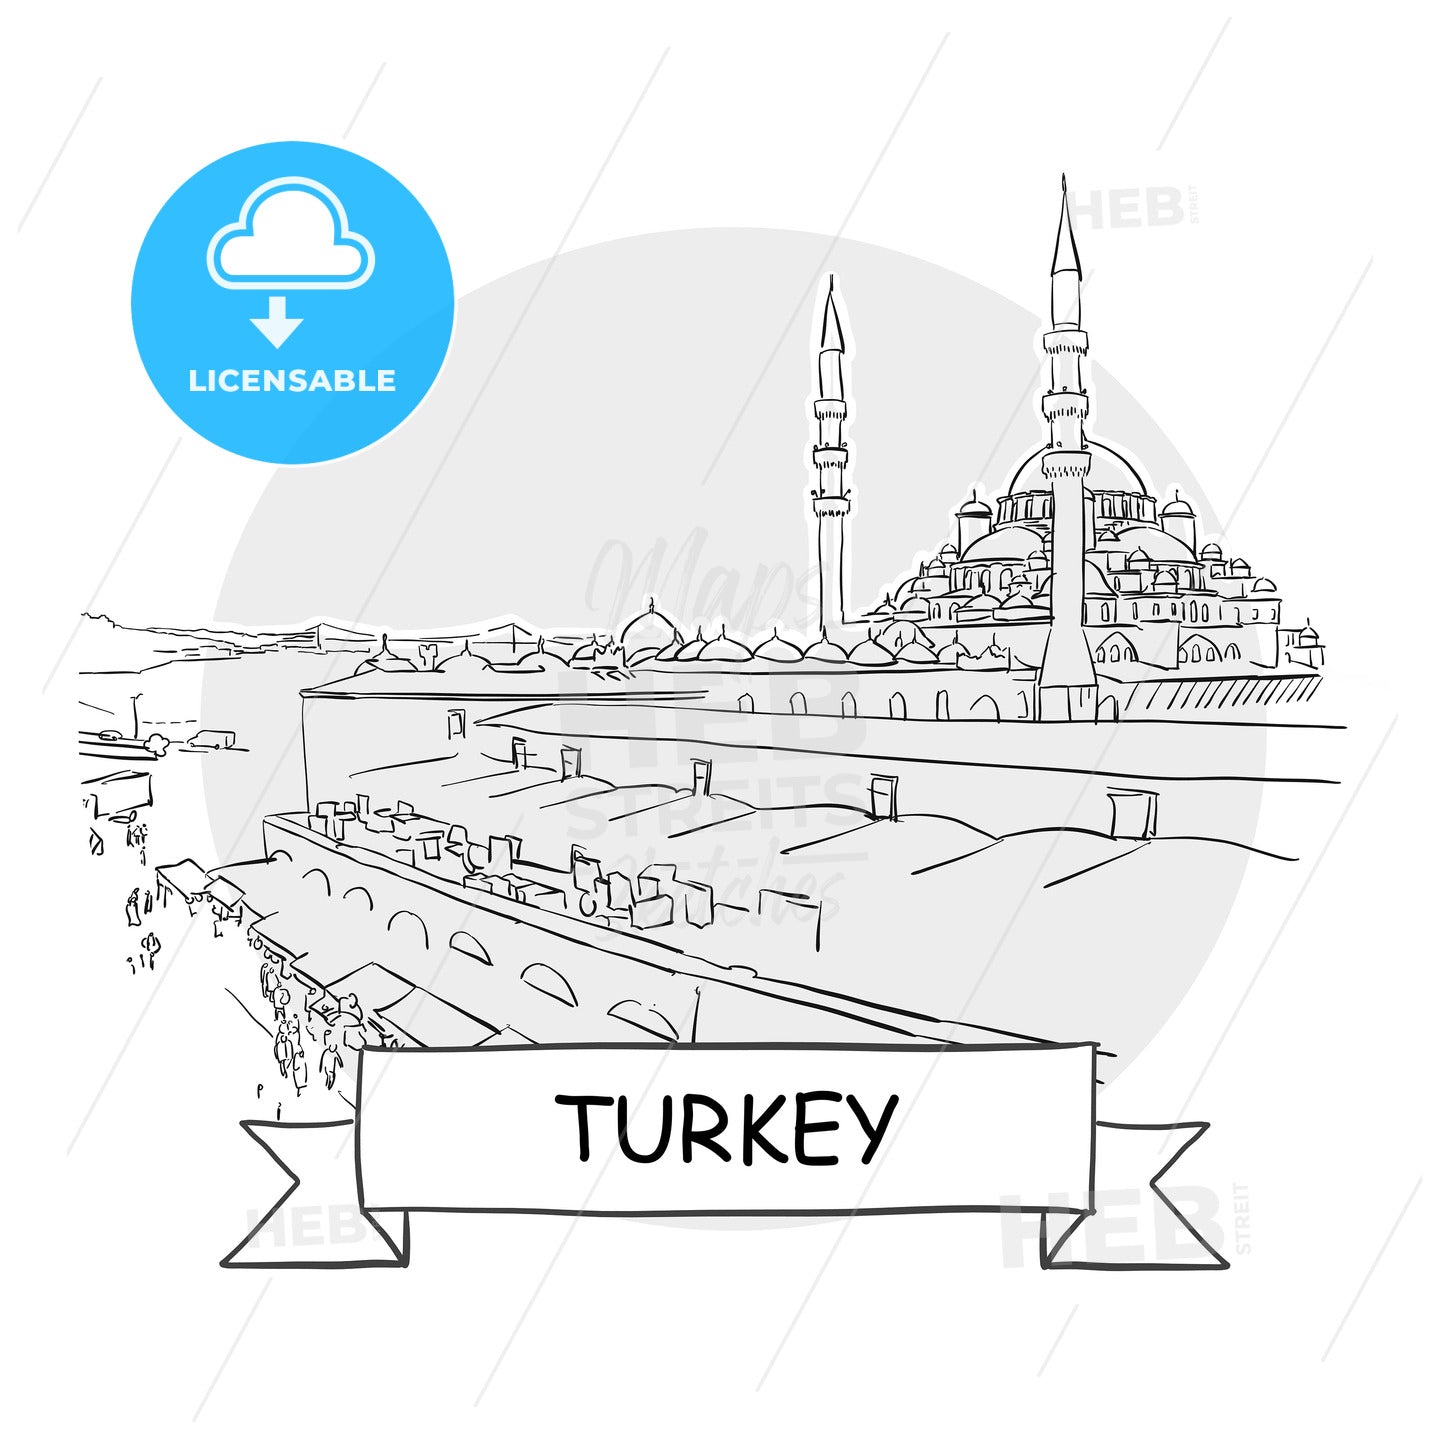 Turkey hand-drawn urban vector sign – instant download